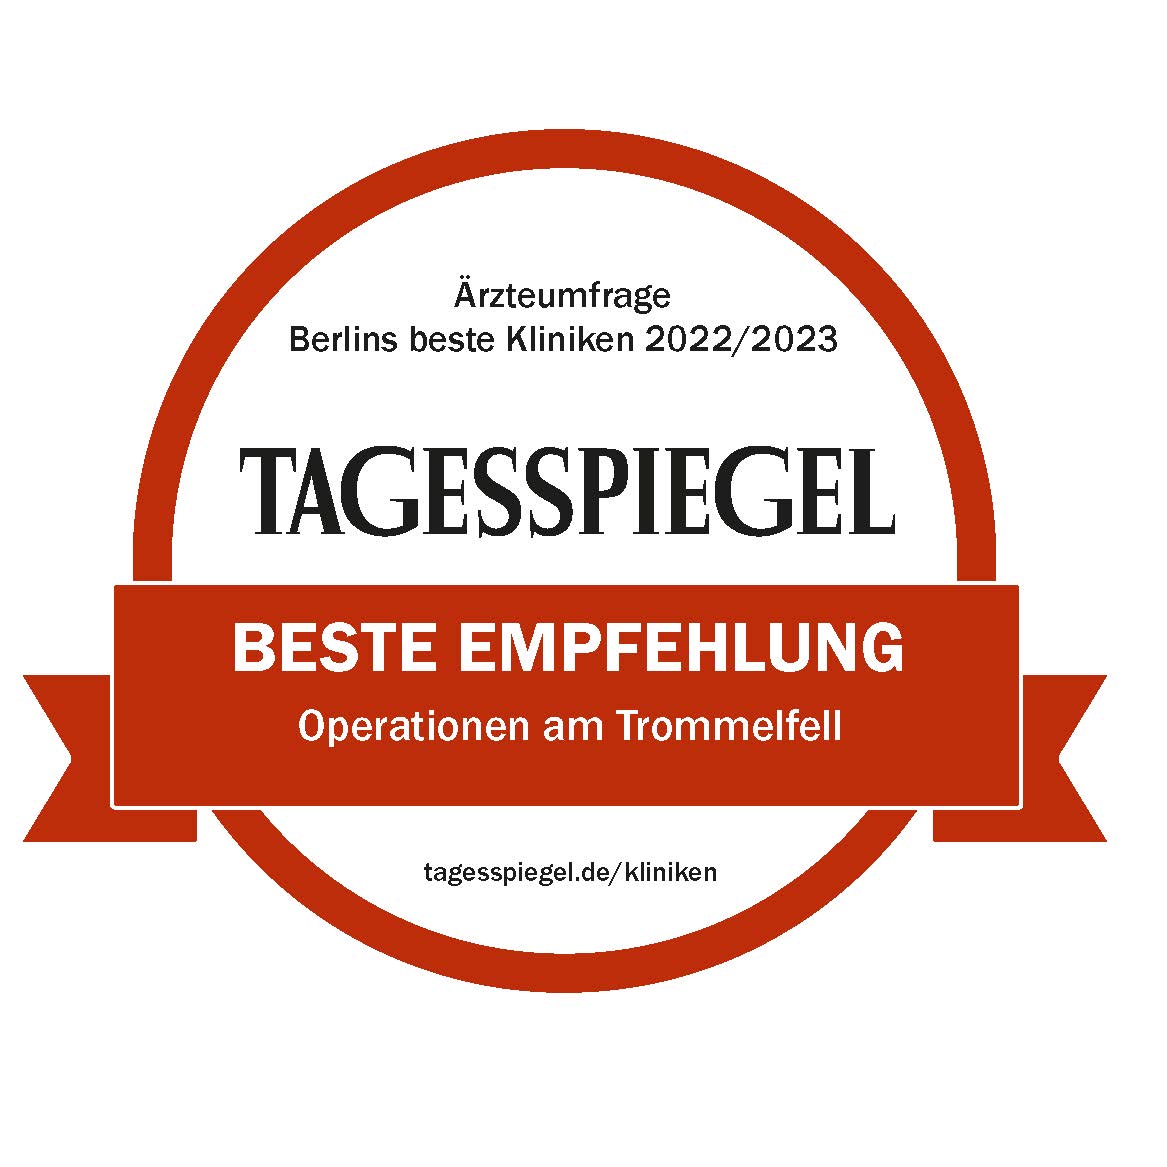 Tagesspiegel: Berlins beste Kliniken: Operationen am Trommelfell